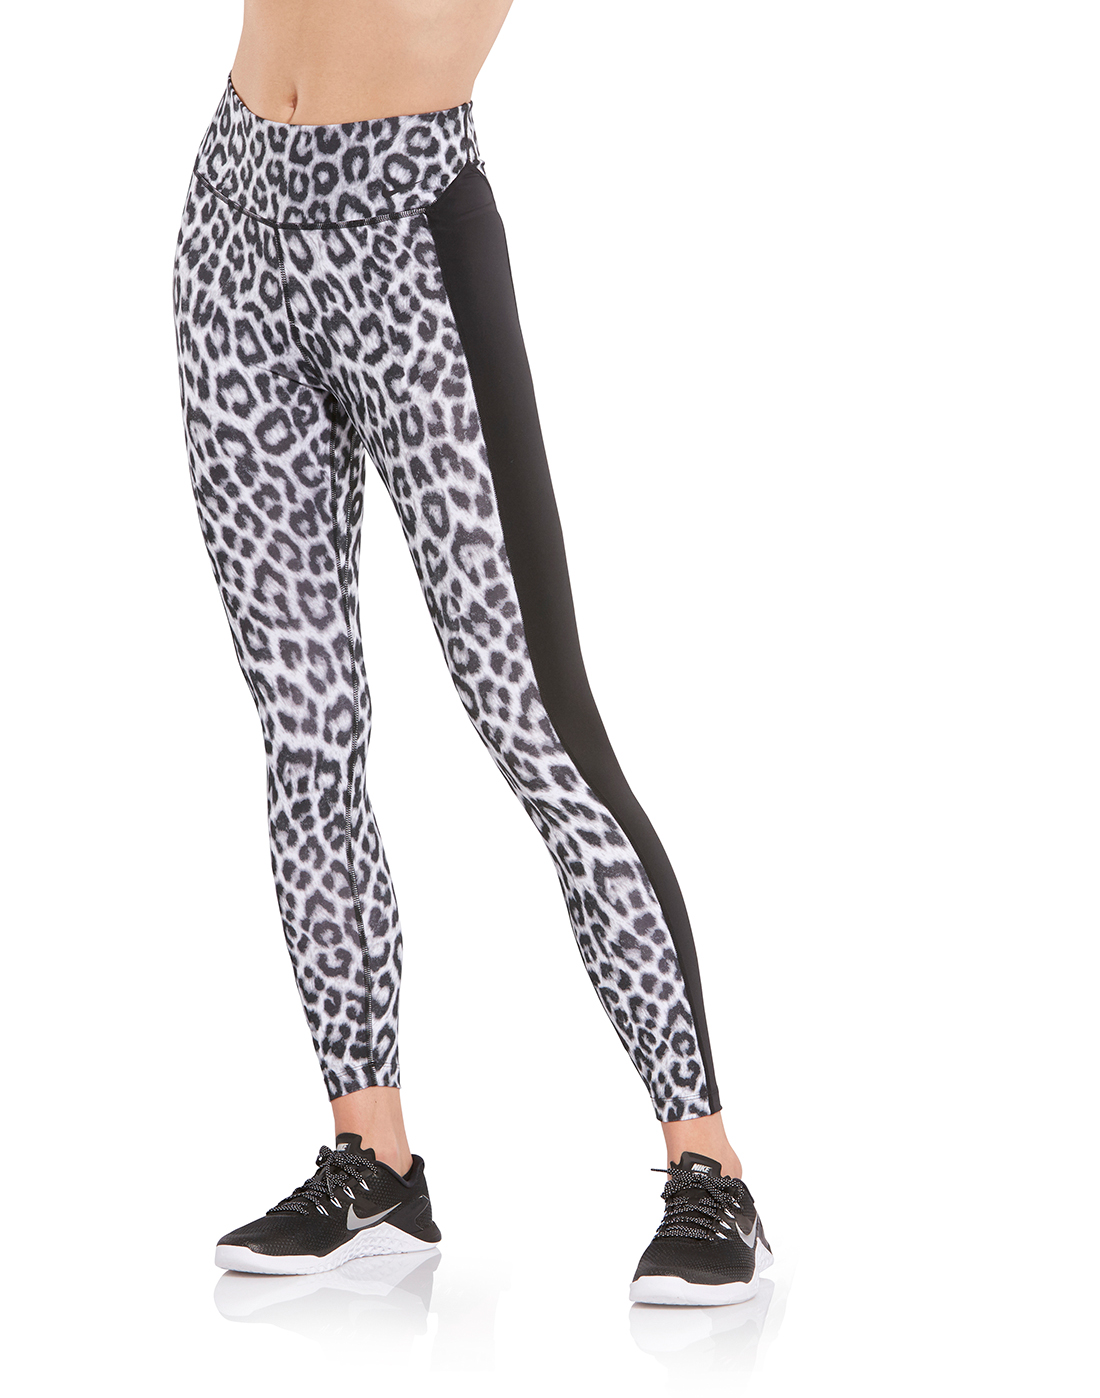 nike one leopard print leggings